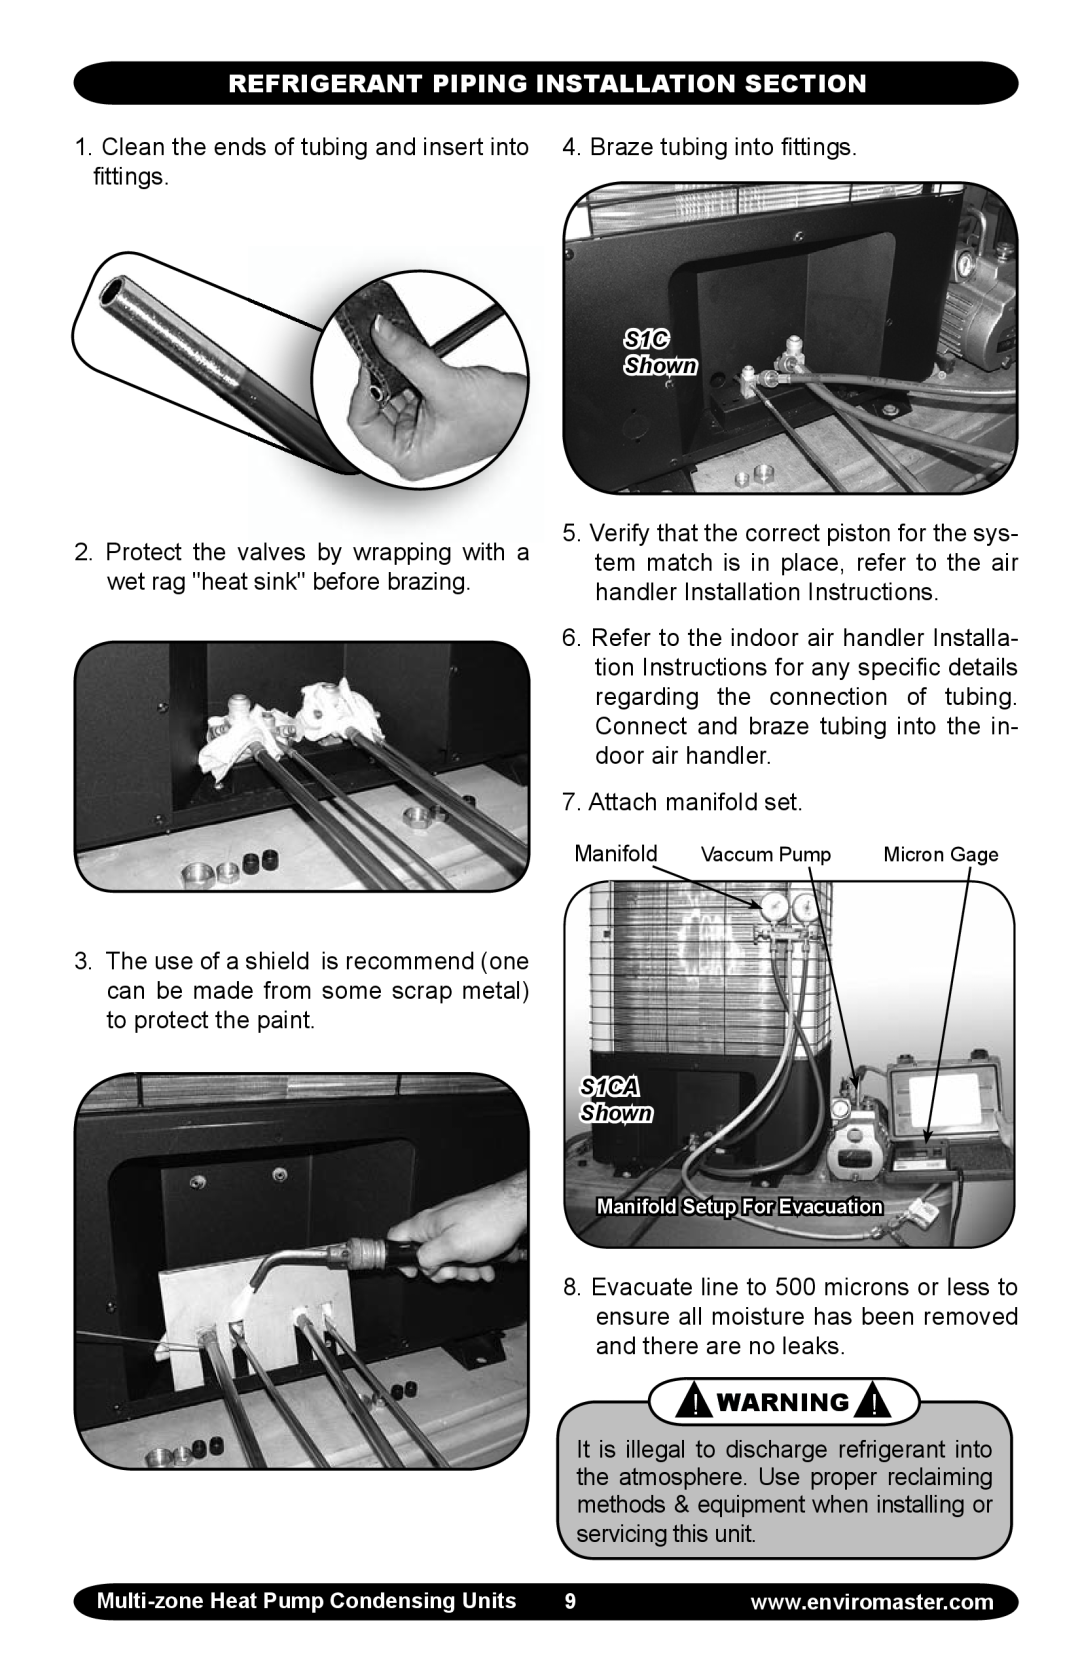 EMI EMI Corp manual Refrigerant Piping Installation Section, Attach manifold set 